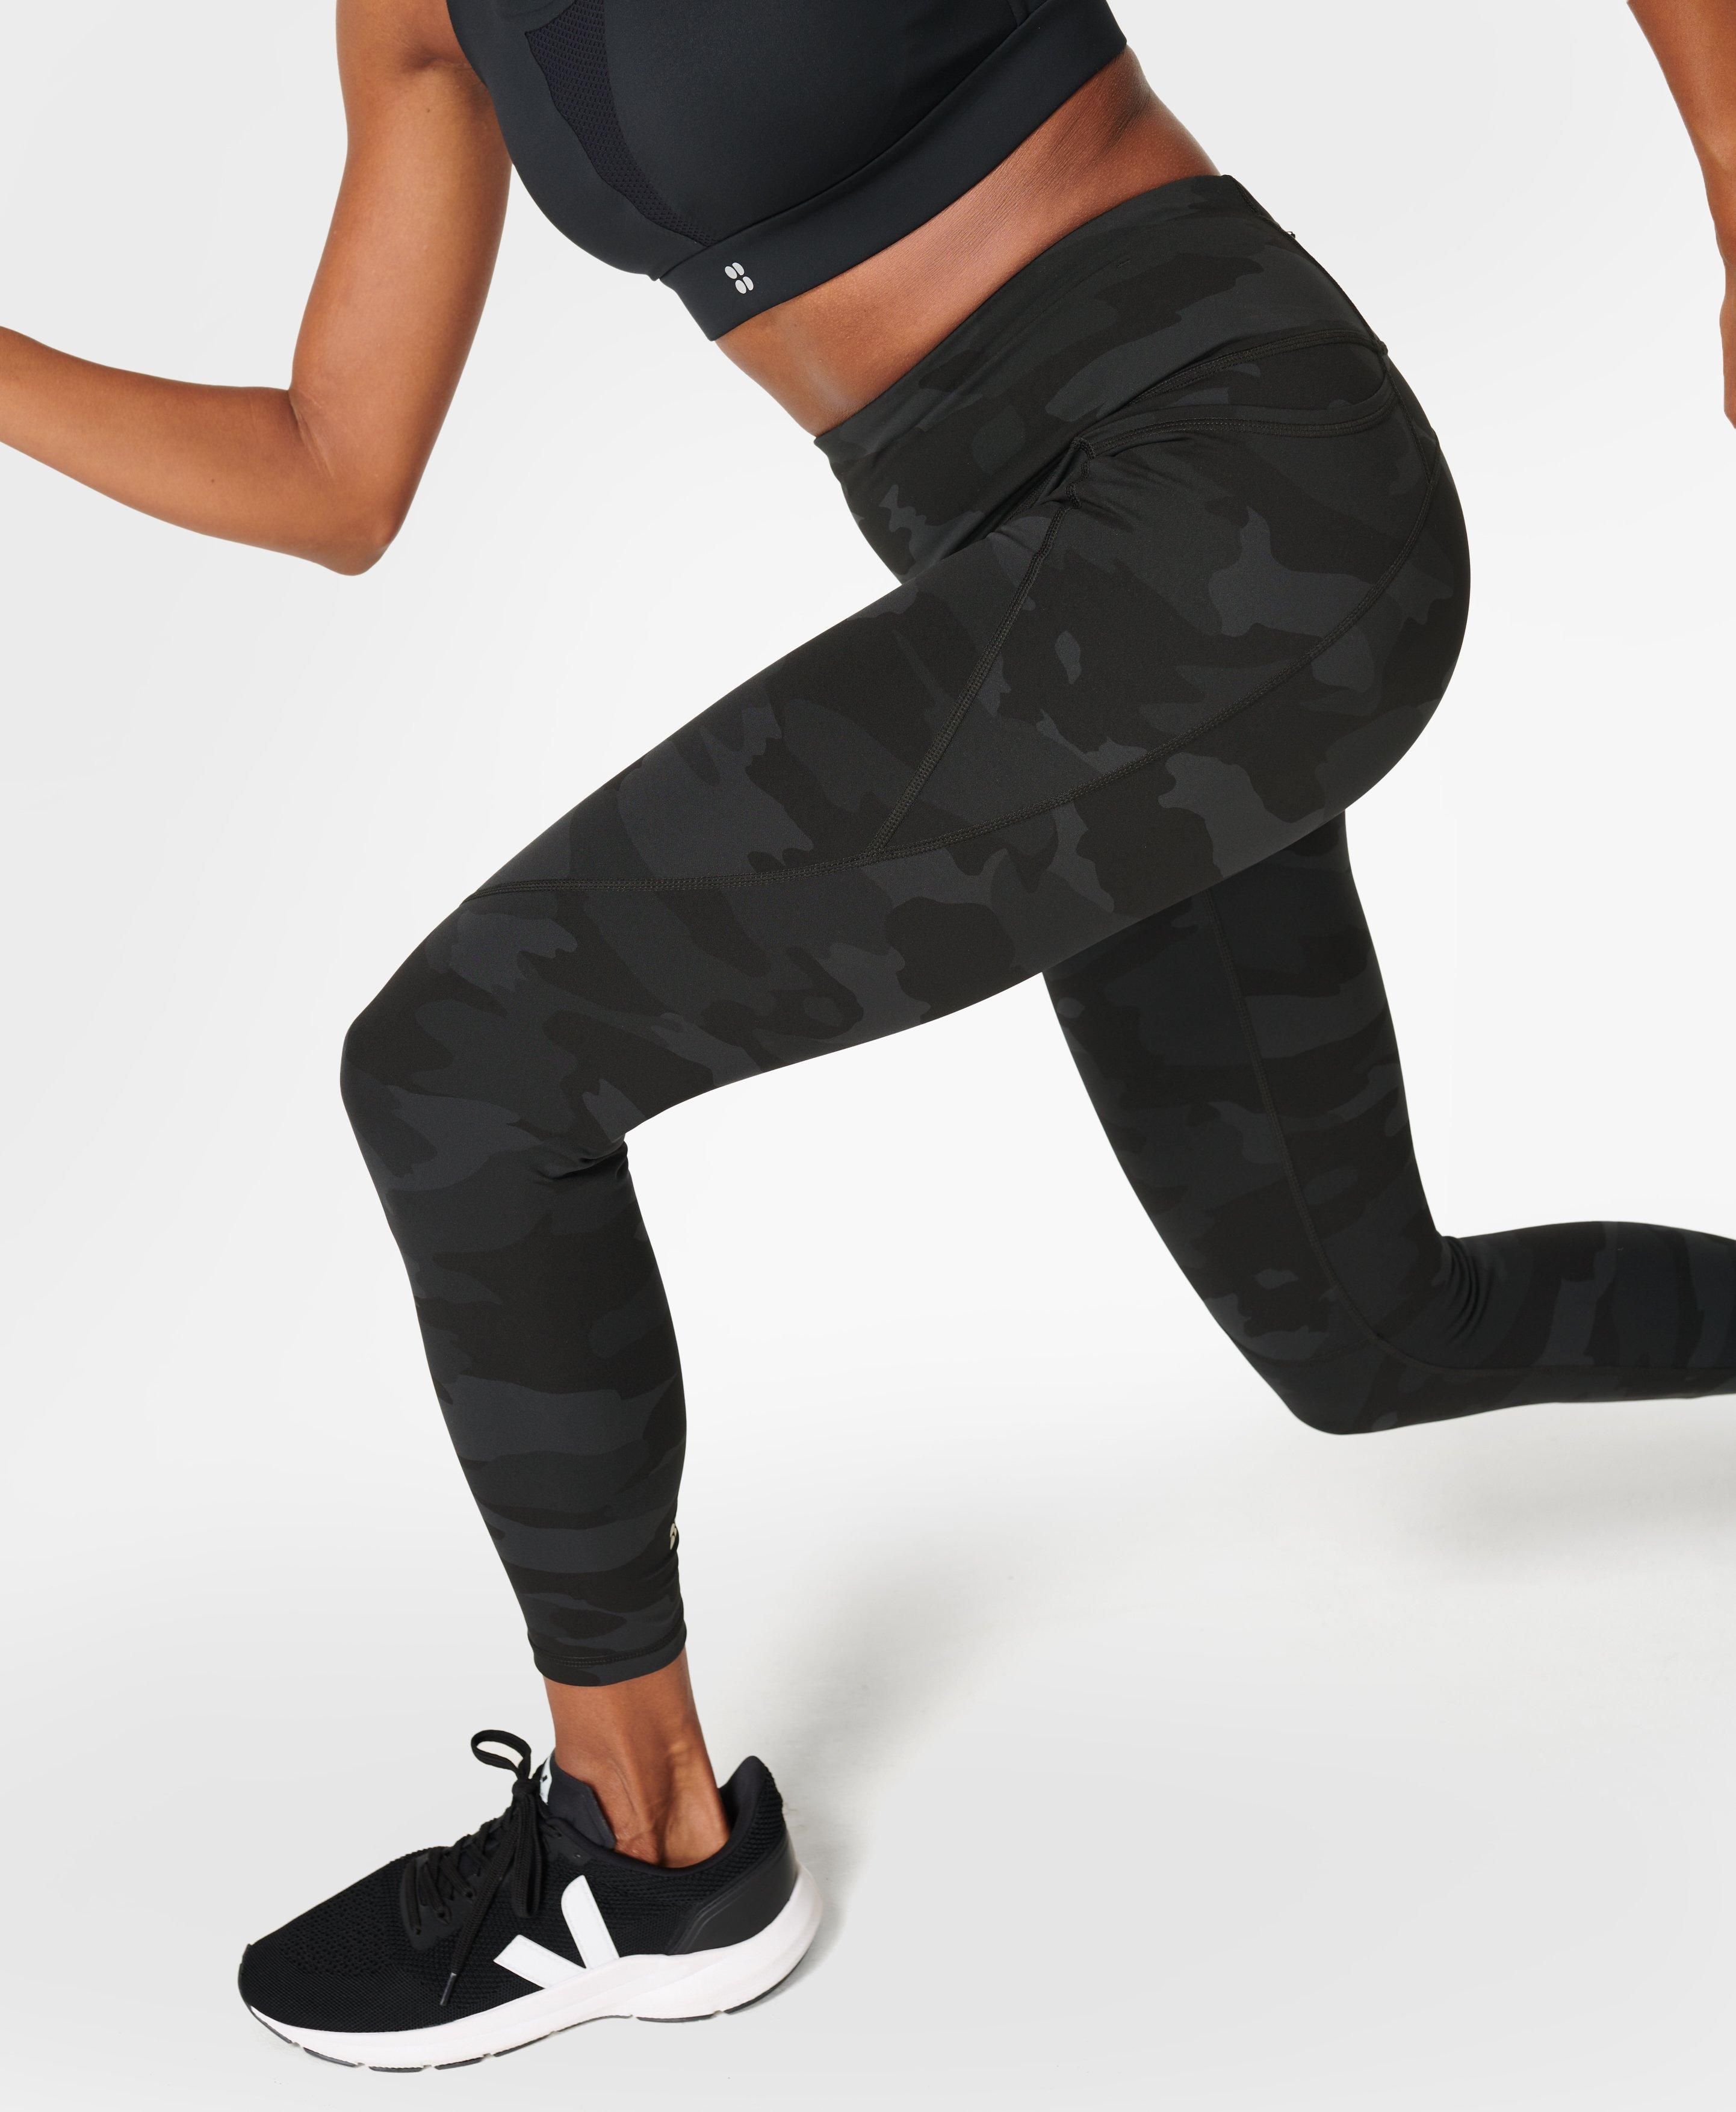 Power Workout Leggings - Ultra Black Camo Print, Women's Leggings